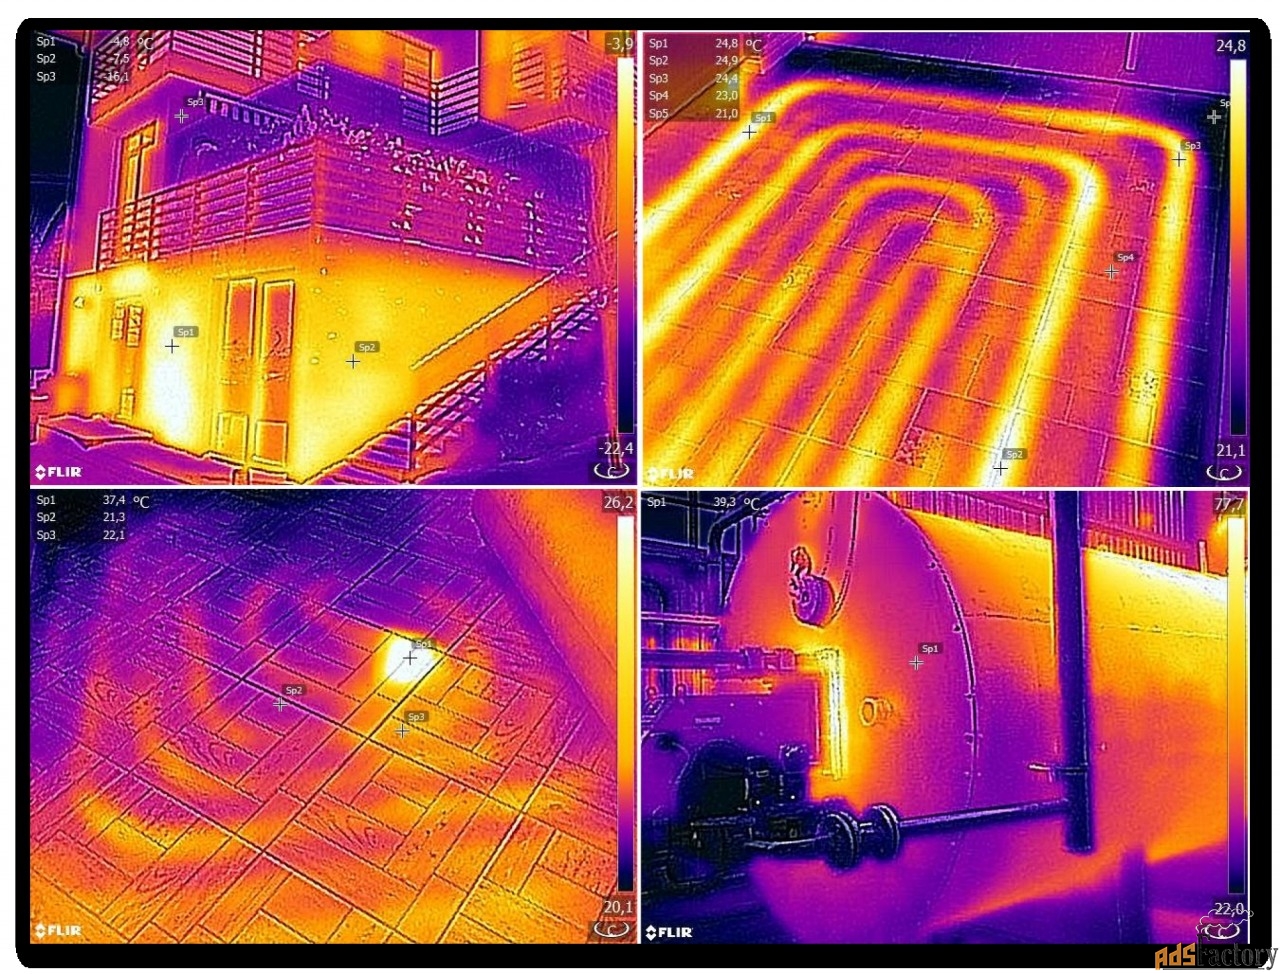 Тепловизор картинки. Тепловизионное обследование FLIR. Теплопотери здания тепловизор. Теплый пол через тепловизор флир. Тепловизор вентфасад.